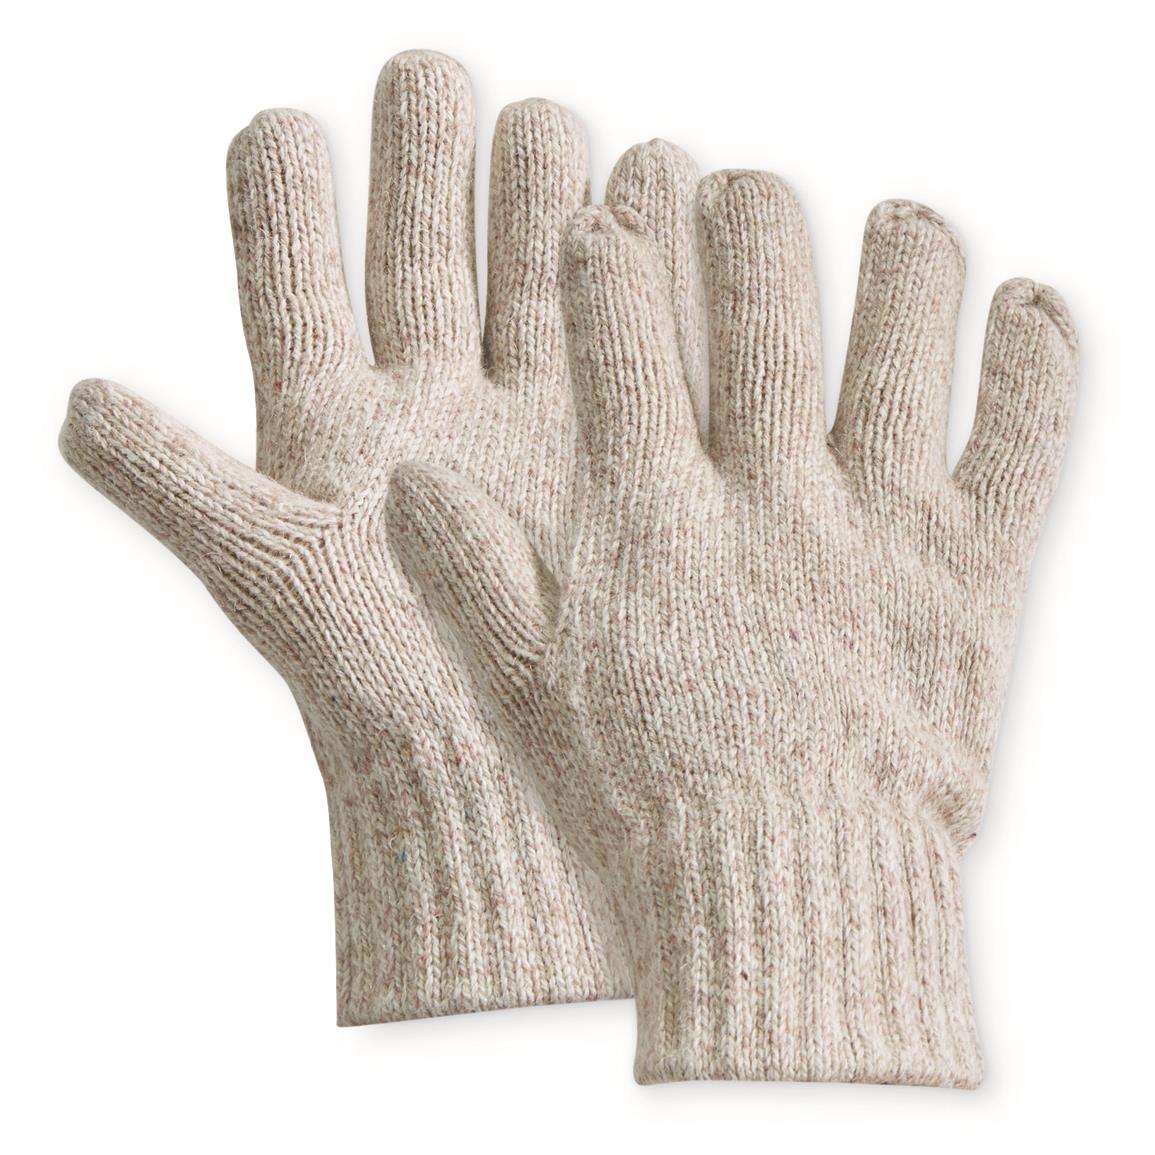 Hungarian Military Surplus Wool Gloves, 6 pairs, New, Tan